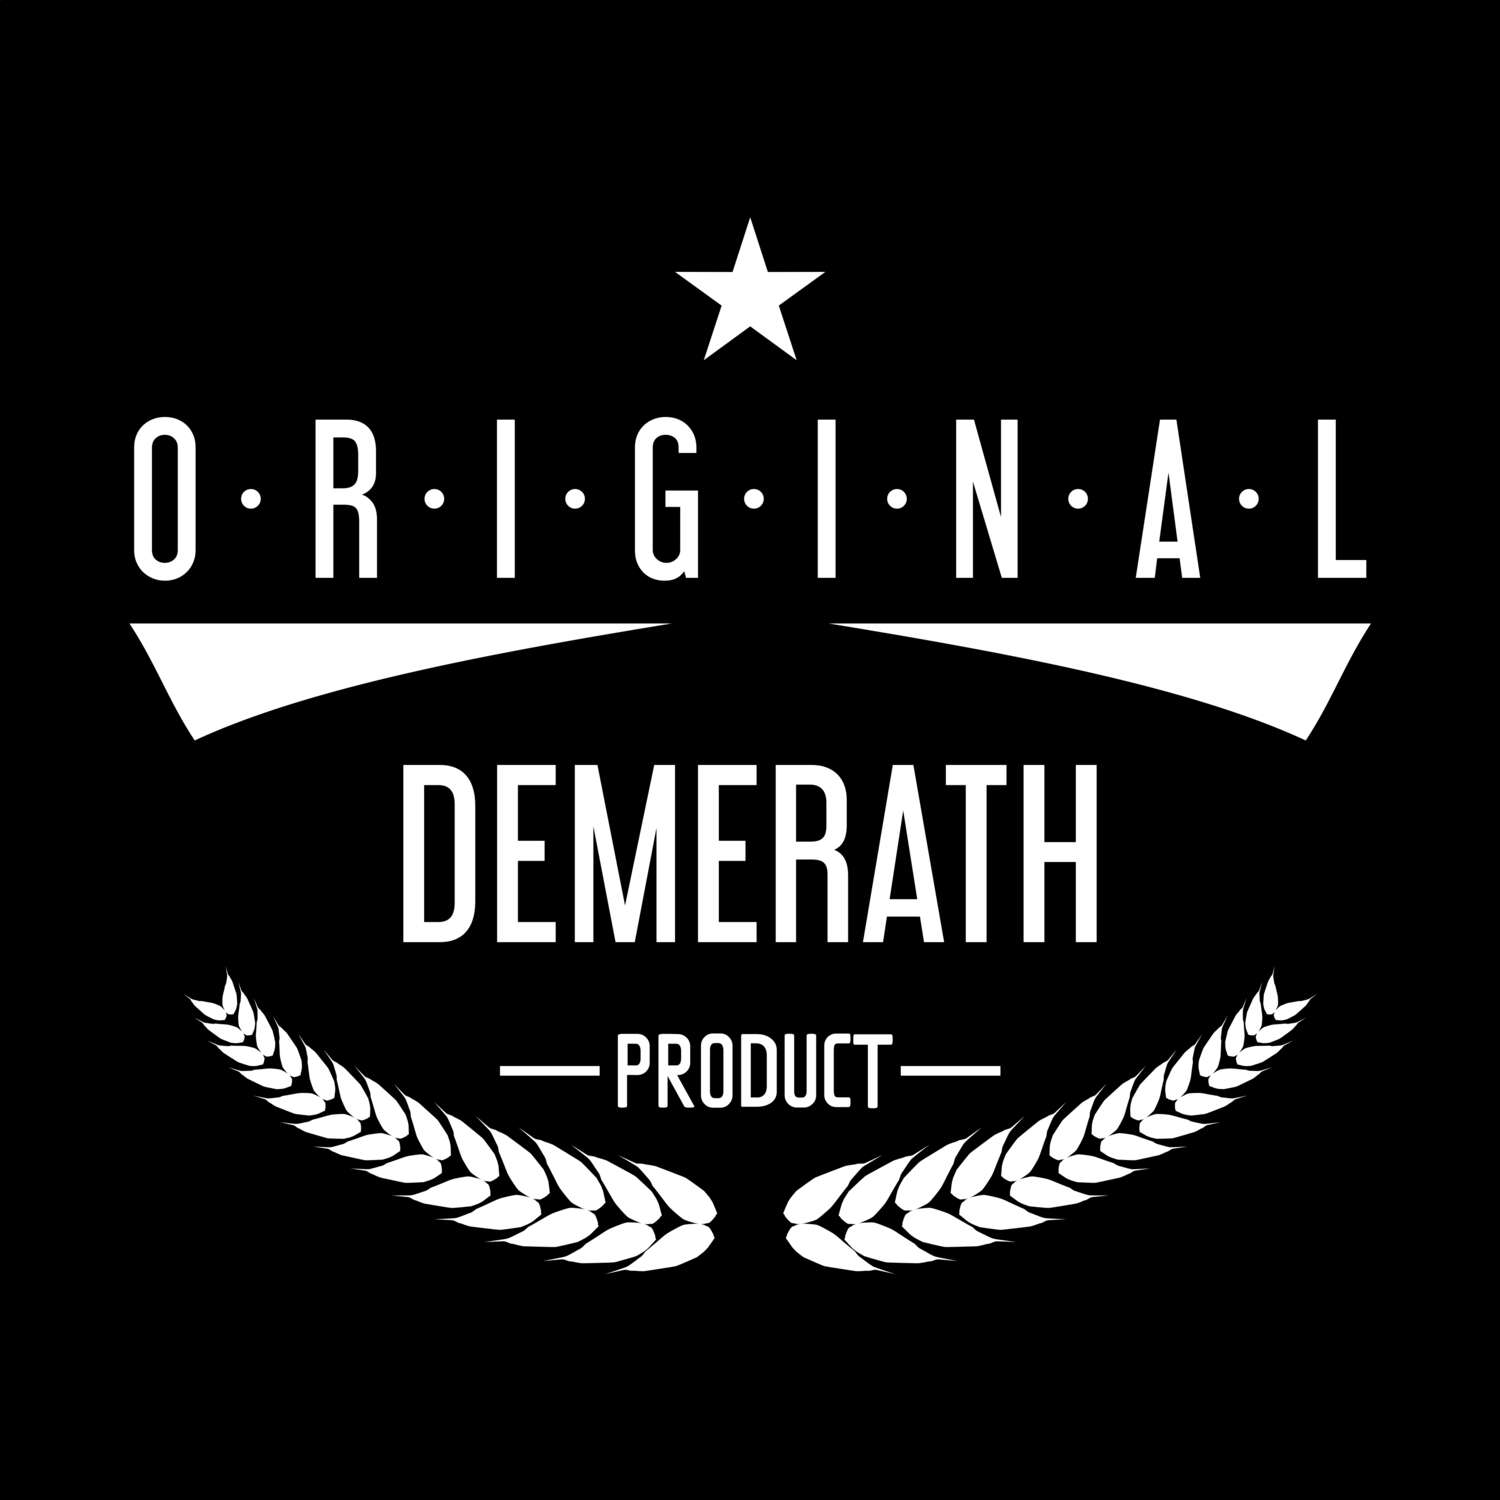 Demerath T-Shirt »Original Product«